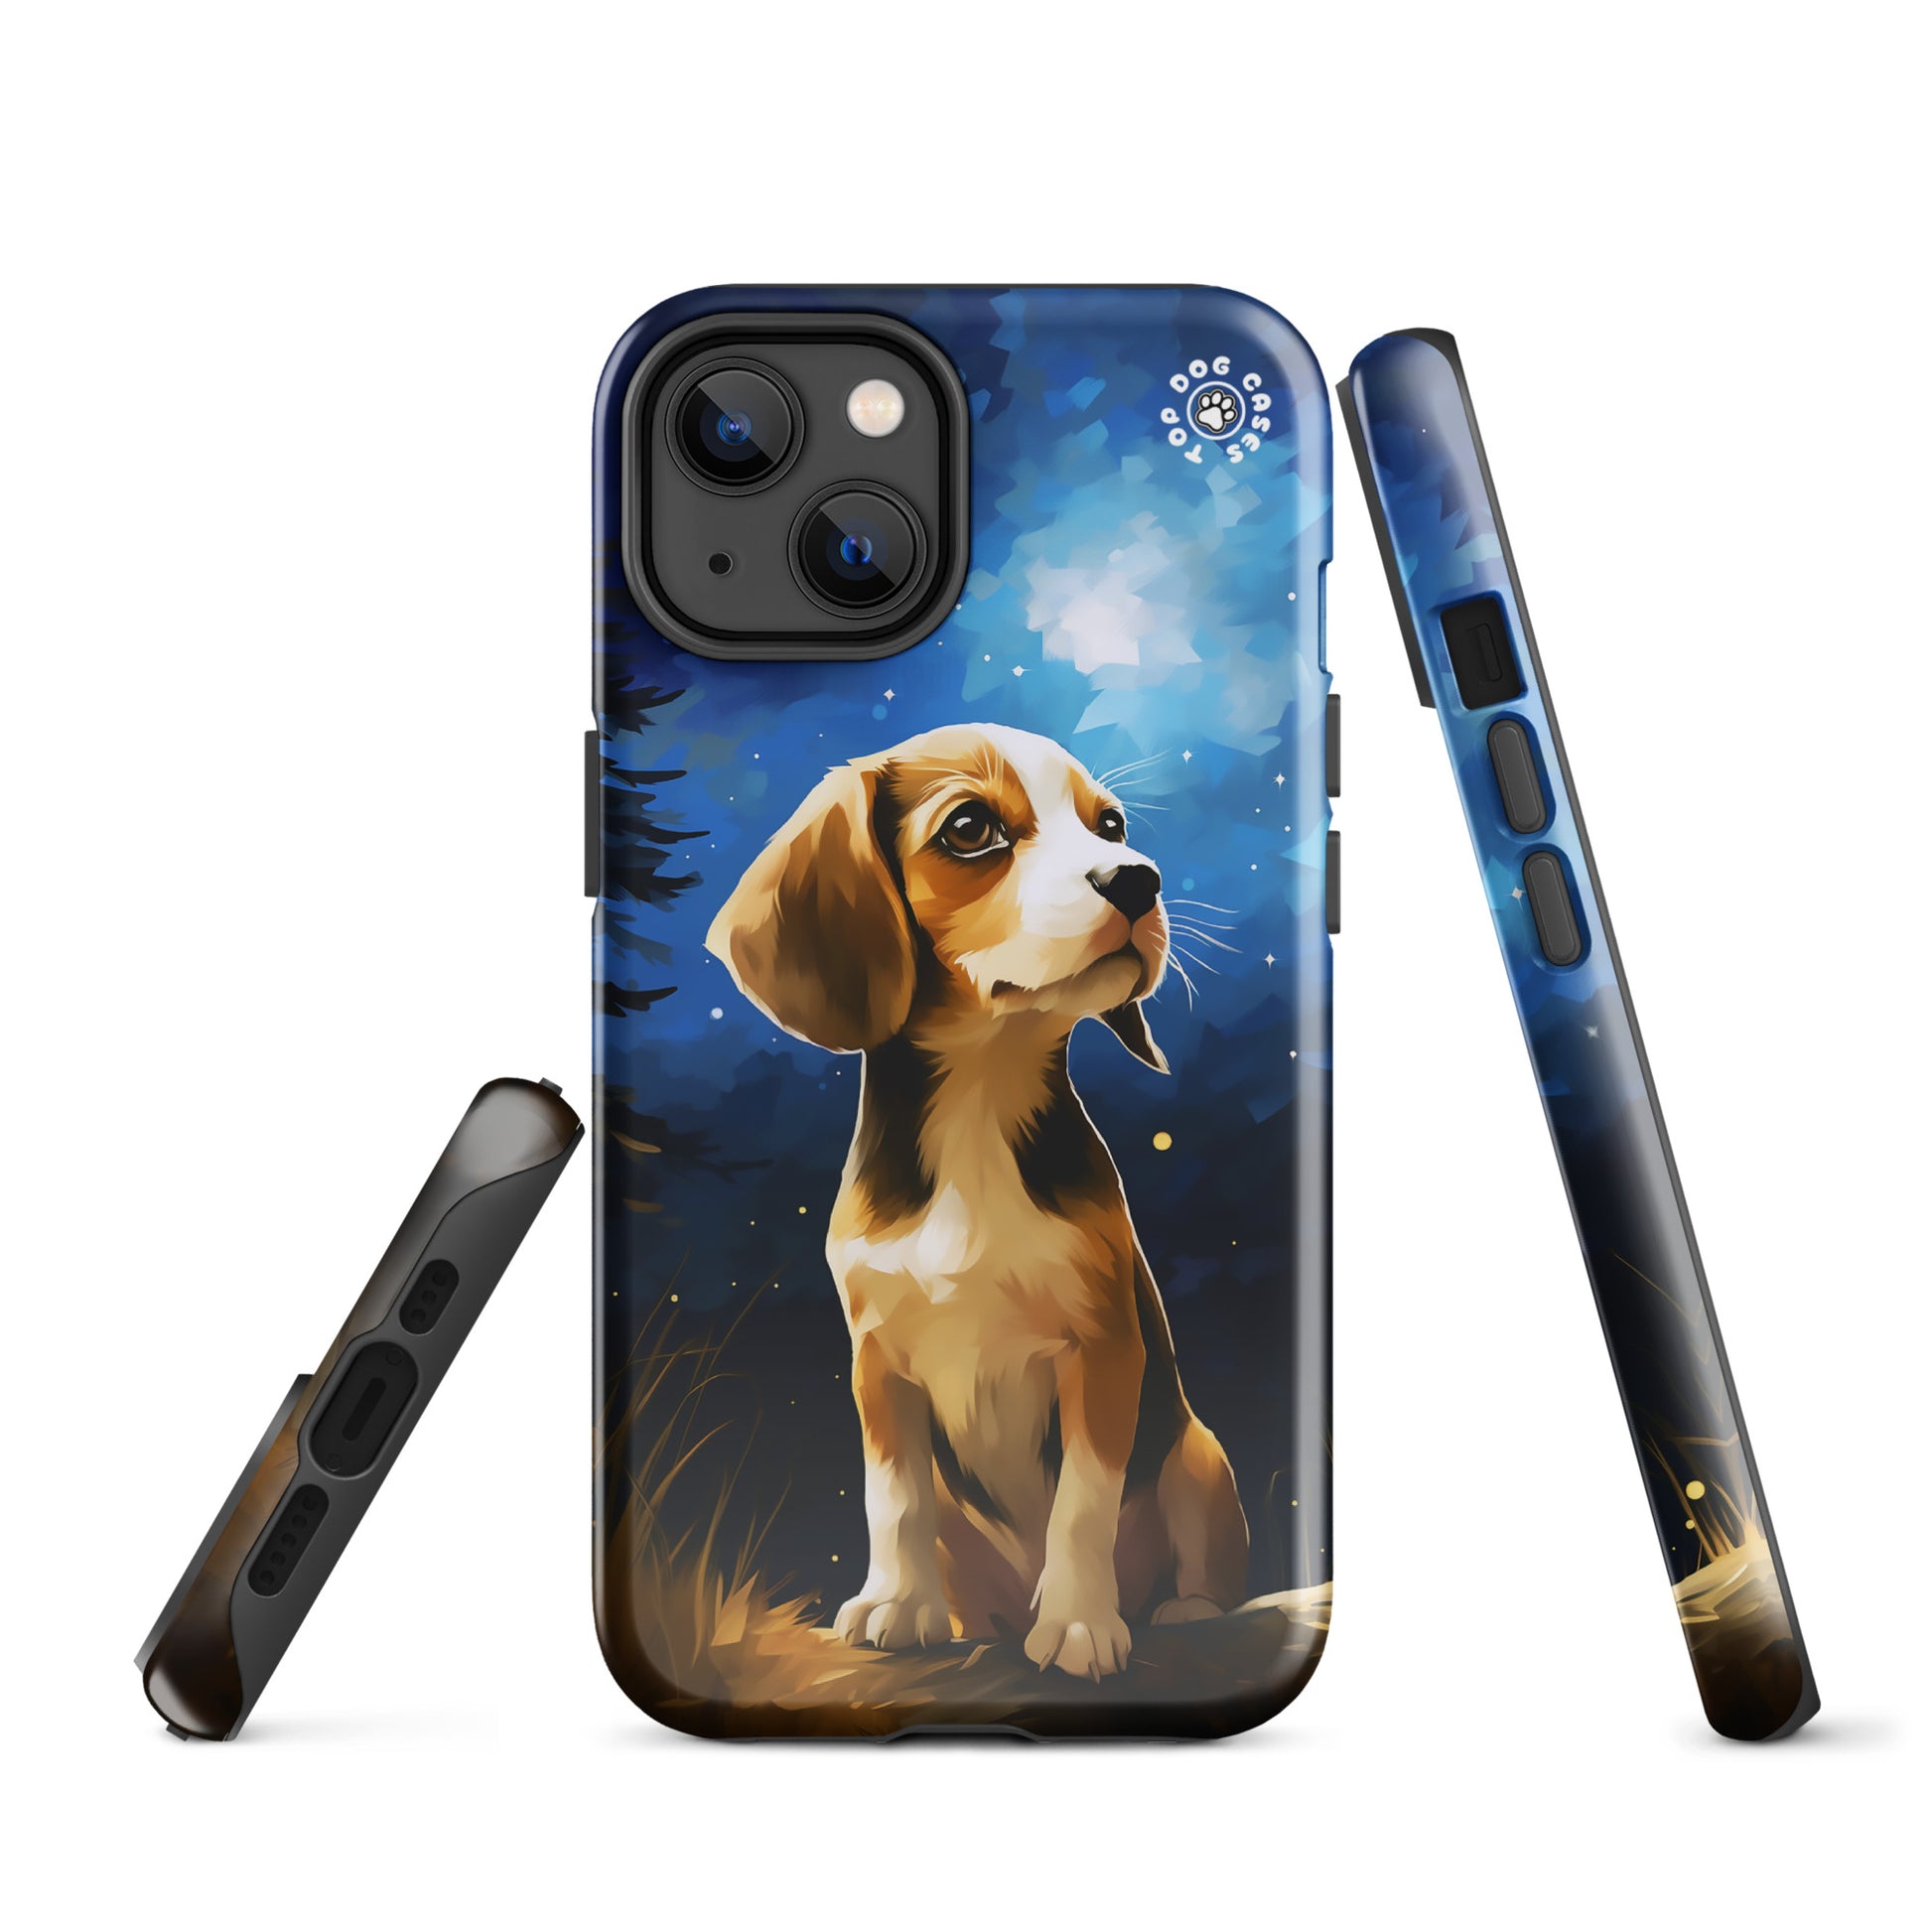 Beagle - iPhone 14 Case - Top Dog Cases - #Beagle, #CuteDog, #CuteDogs, #CutePhoneCases, #DogPhoneCase, #dogs, #iPhone, #iPhone14, #iPhone14case, #iPhone14DogCase, #iPhone14Plus, #iPhone14Pluscase, #iPhone14Pro, #iPhone14ProMax, #iPhone14ProMaxCase